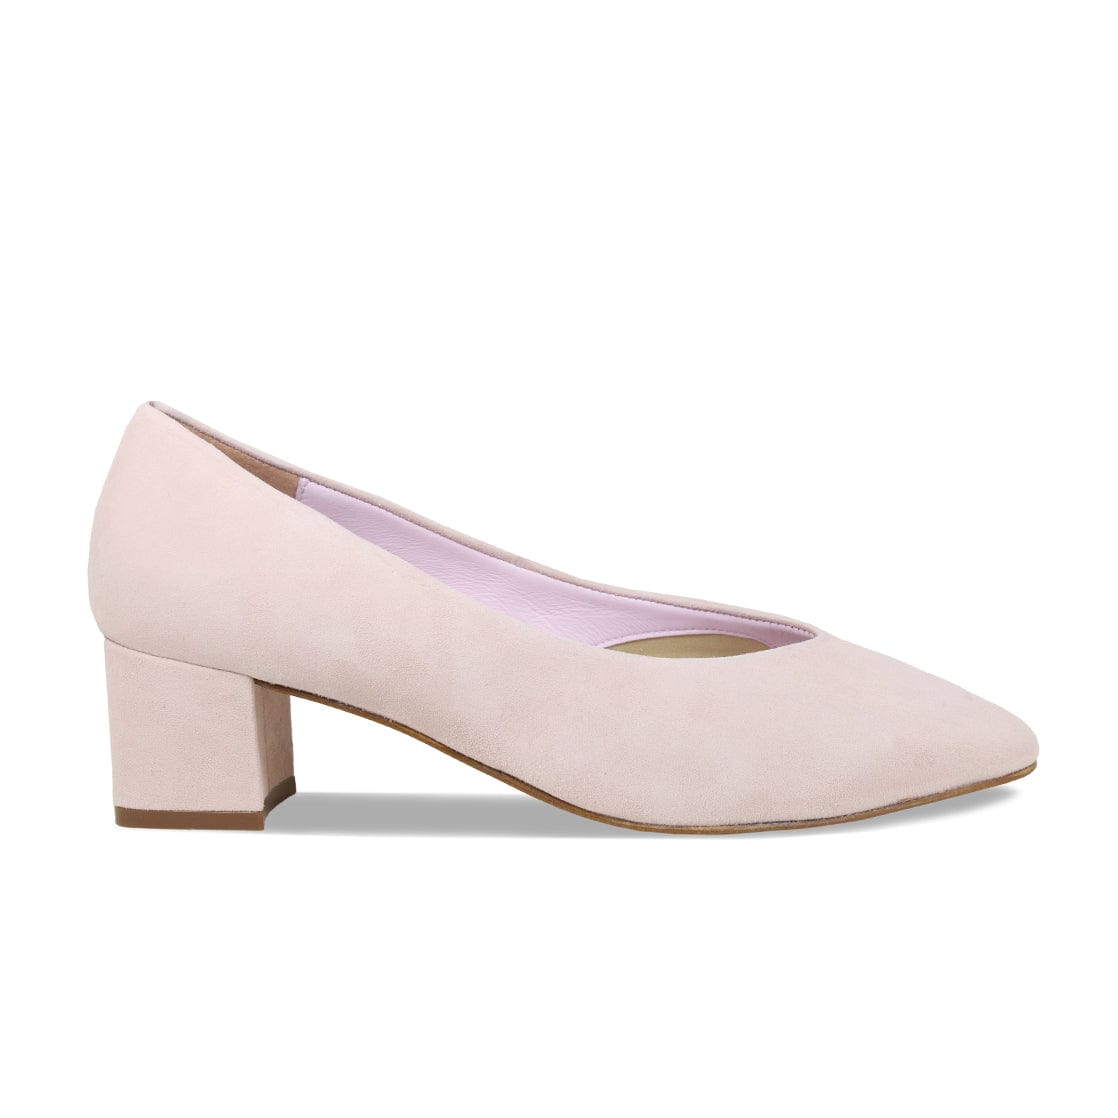 Shoedazzle Women's Size 6.5 Eloise Blush Pink Gold Peep Toe Bejeweled Heels  | eBay